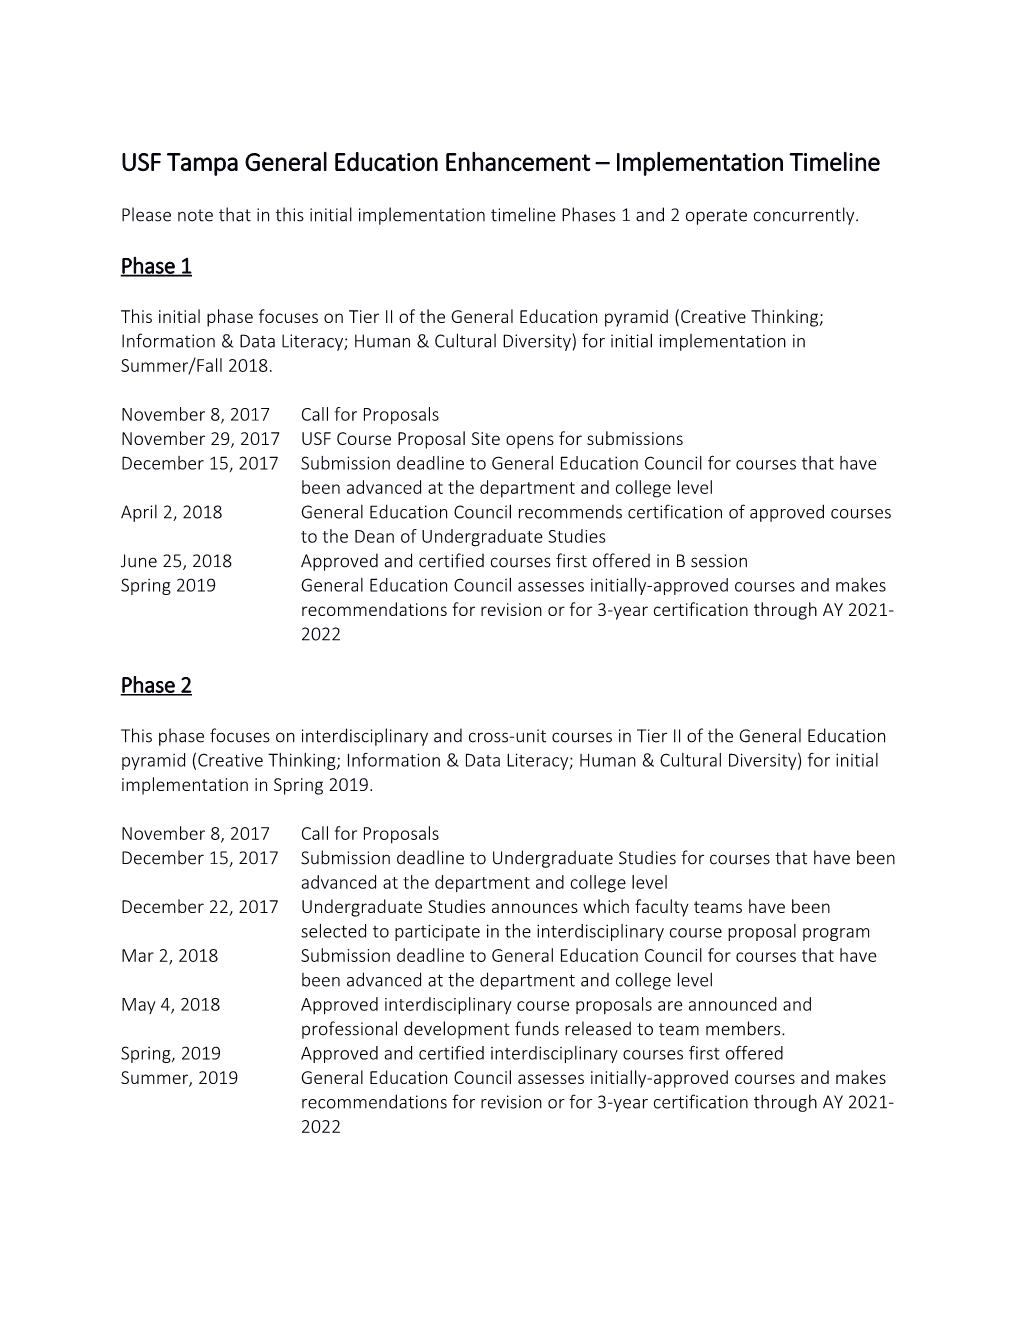 USF Tampa General Education Enhancement Implementation Timeline